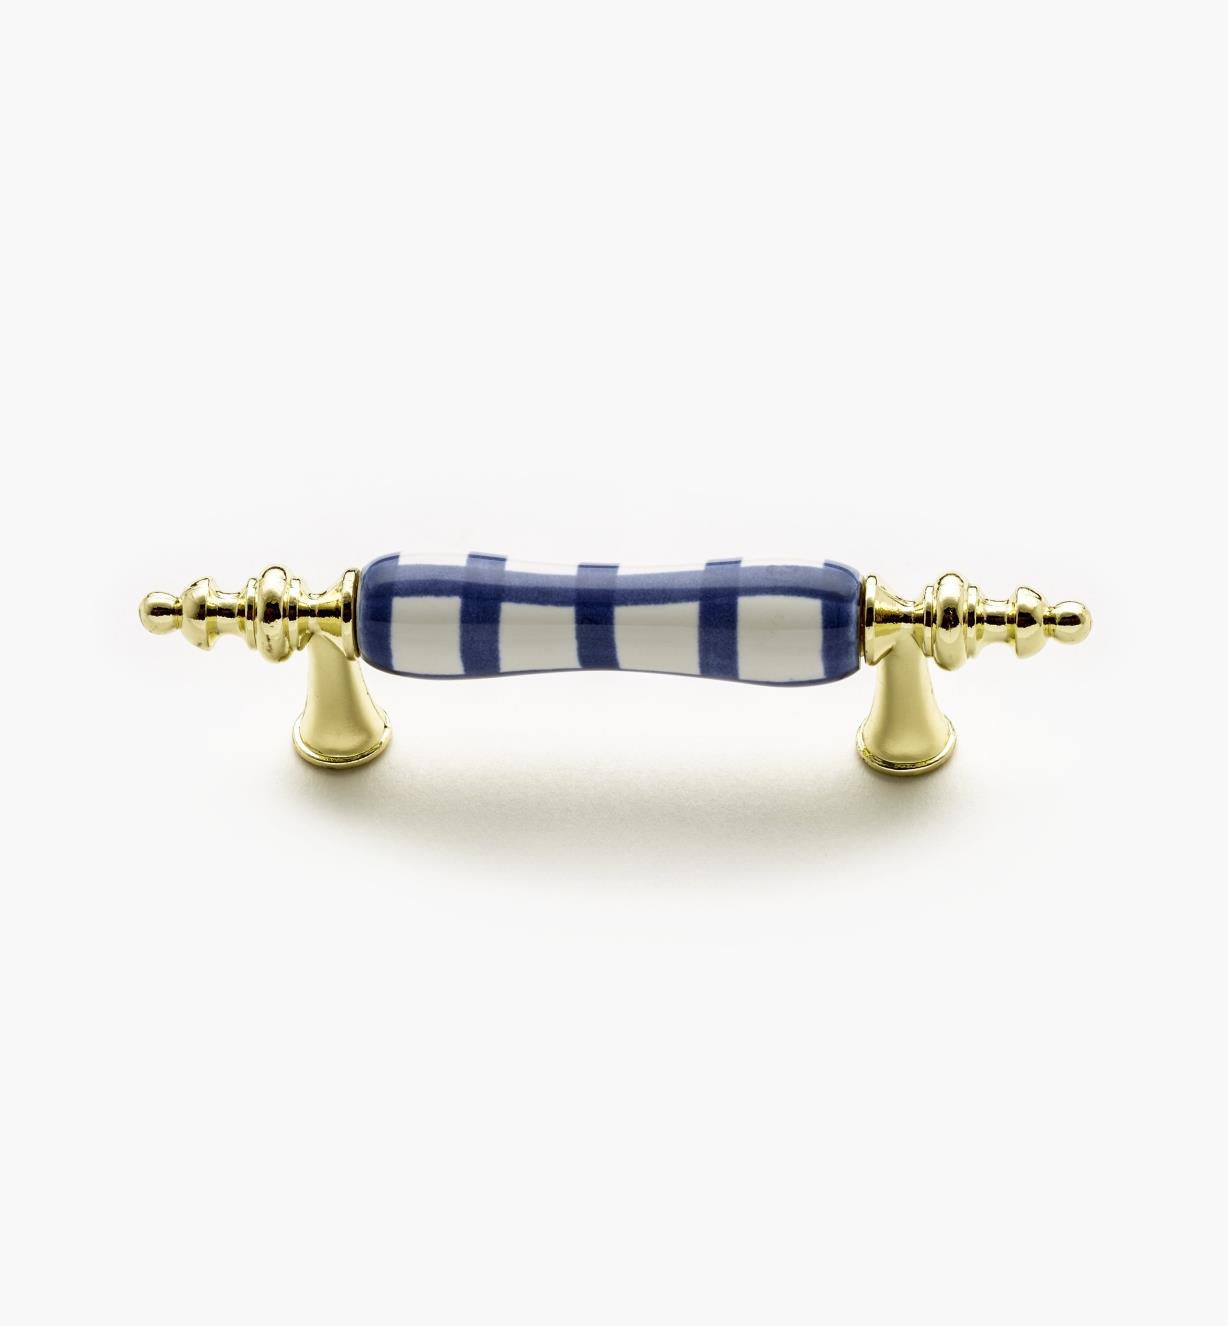 00W5233 - 76mm Blue Ornate Pull